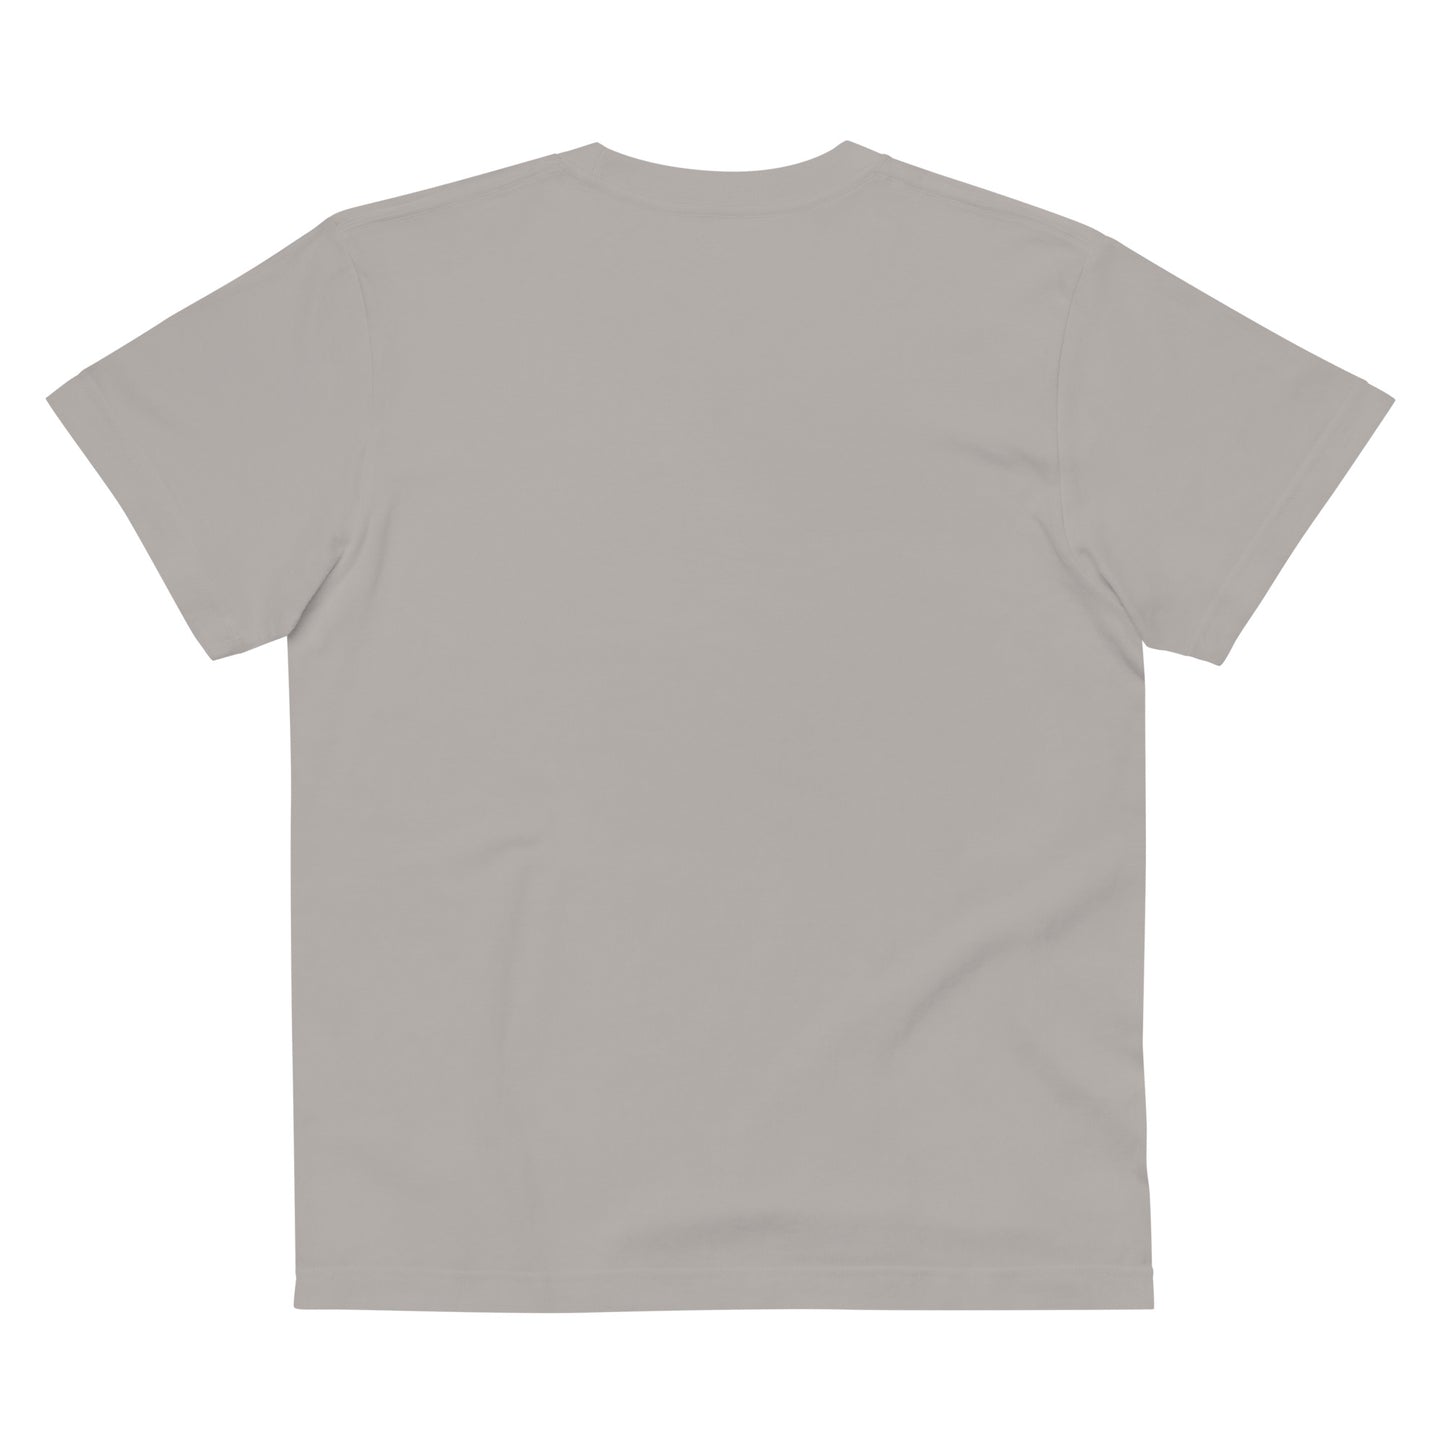 E017 - เสื้อยืด/รูปร่างมาตรฐาน (กระโดดอวกาศ : สีเทา/สีเทาชาร์โคล)